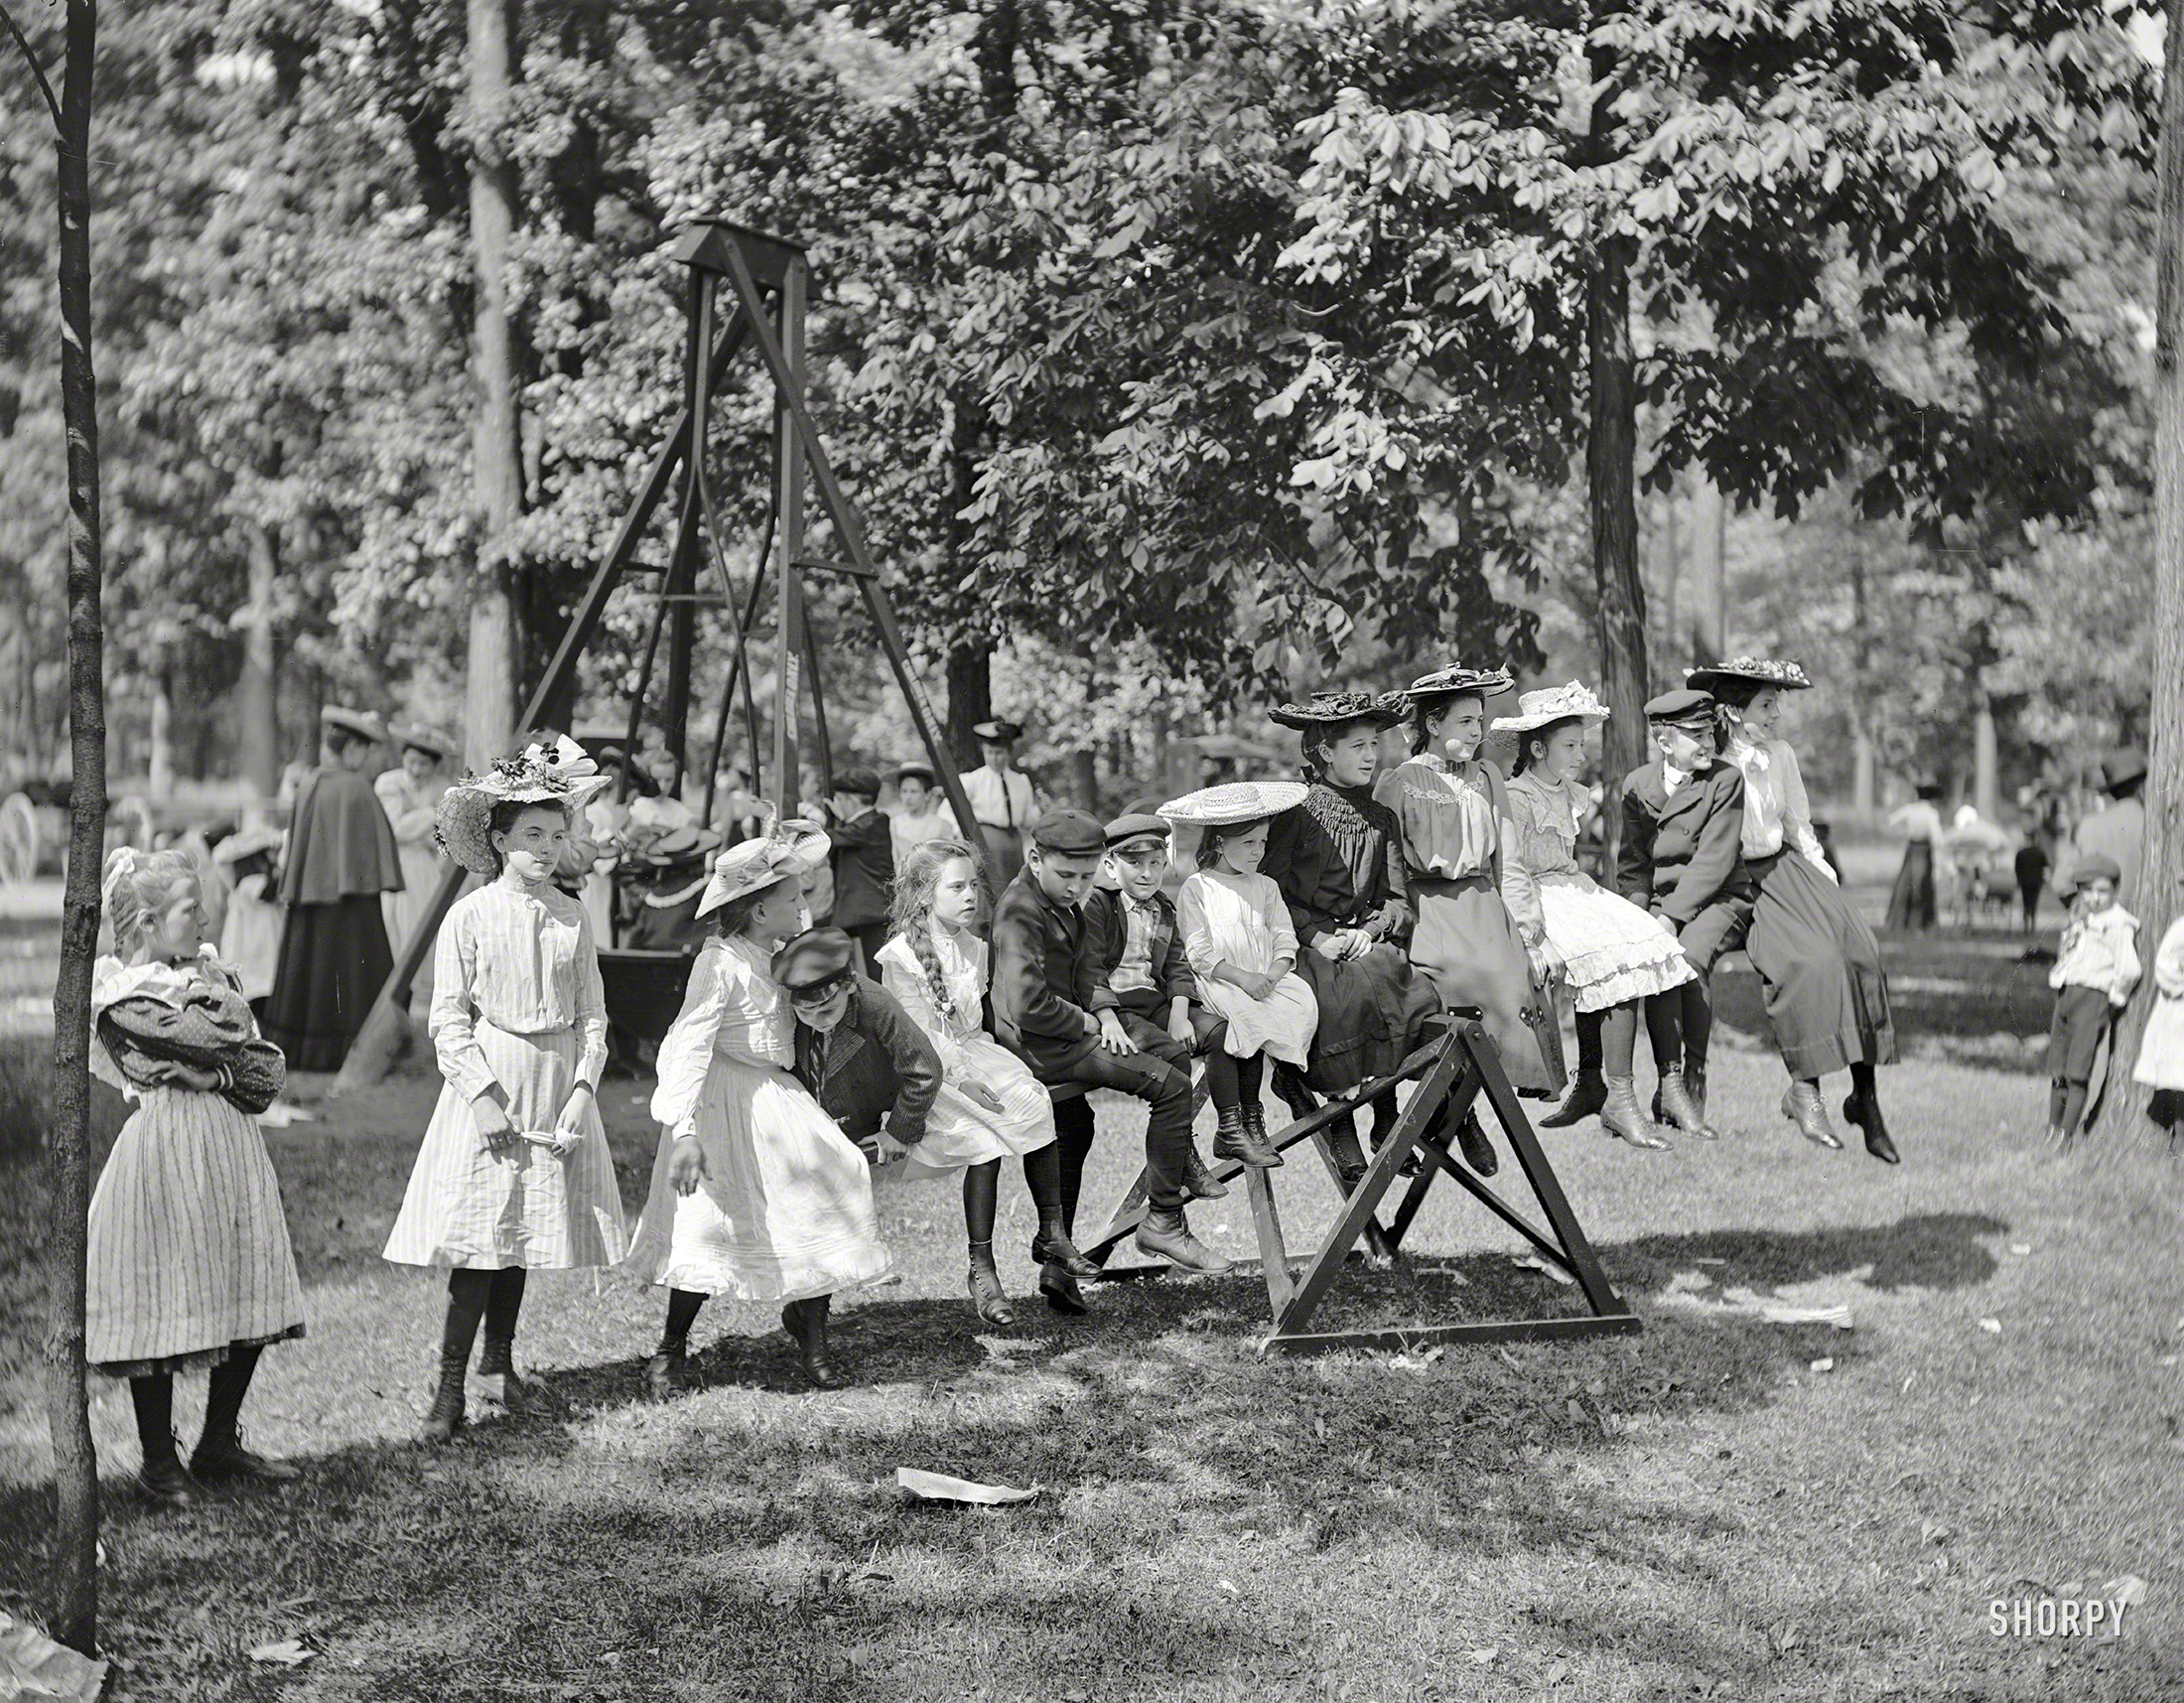 Detroit ca. 1903. "Children's playground, Belle Isle Park." Please note: CHILDREN ONLY. 8x10 glass negative, Detroit Publishing Company. View full size.